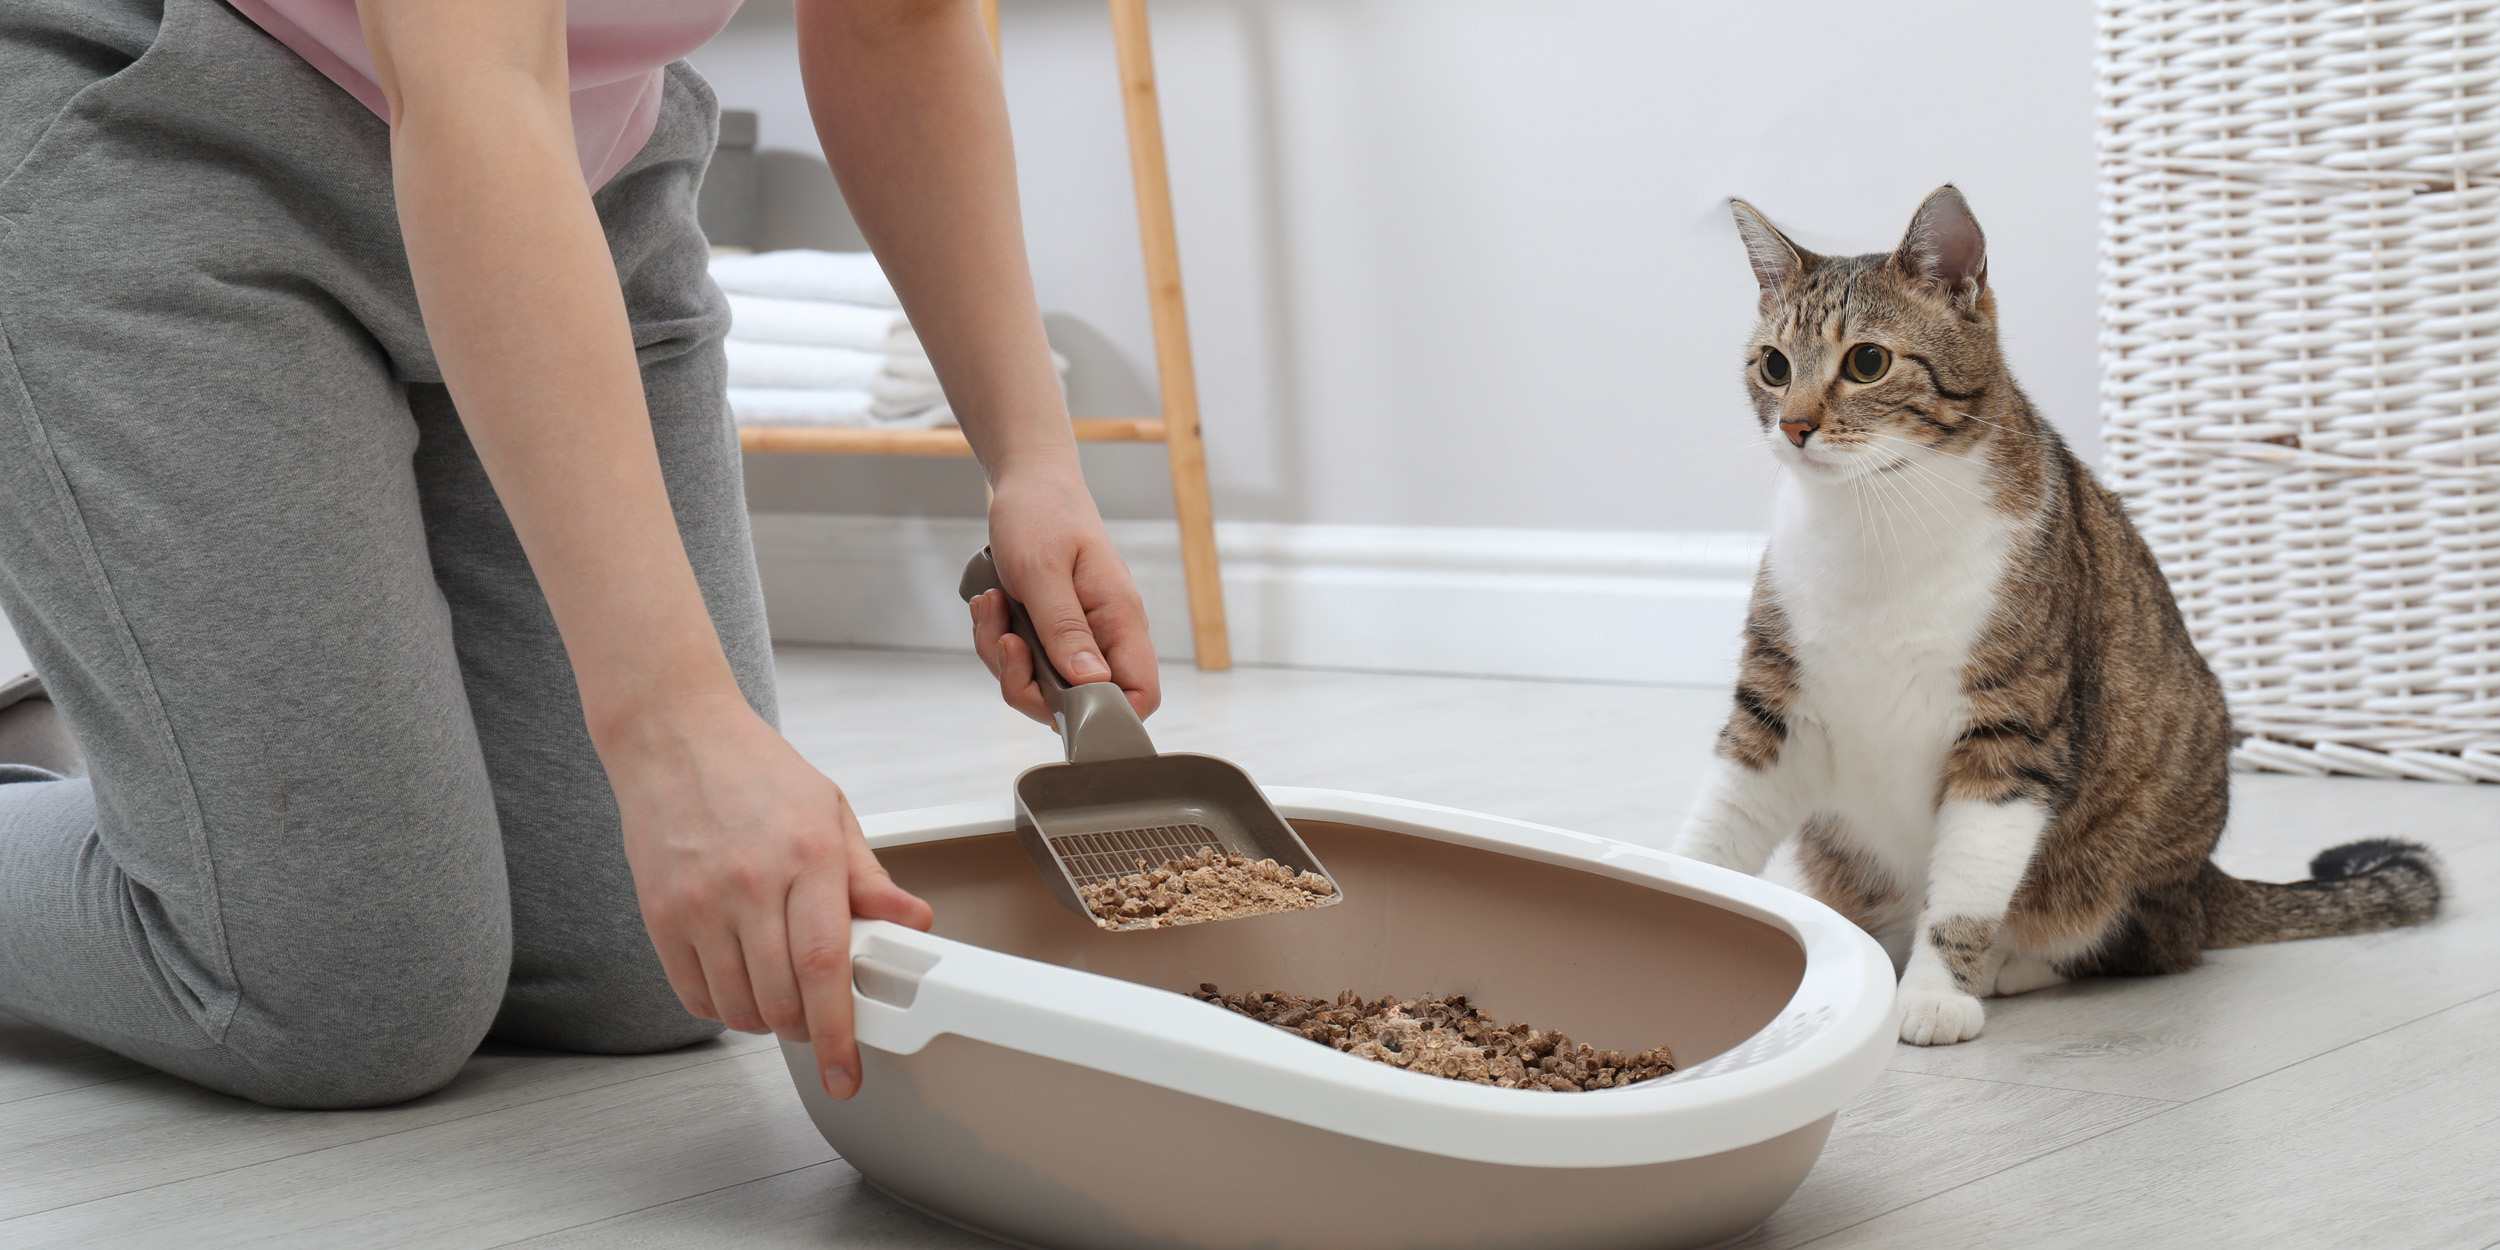 Убрать запах мочи кошки с дивана в домашних условиях